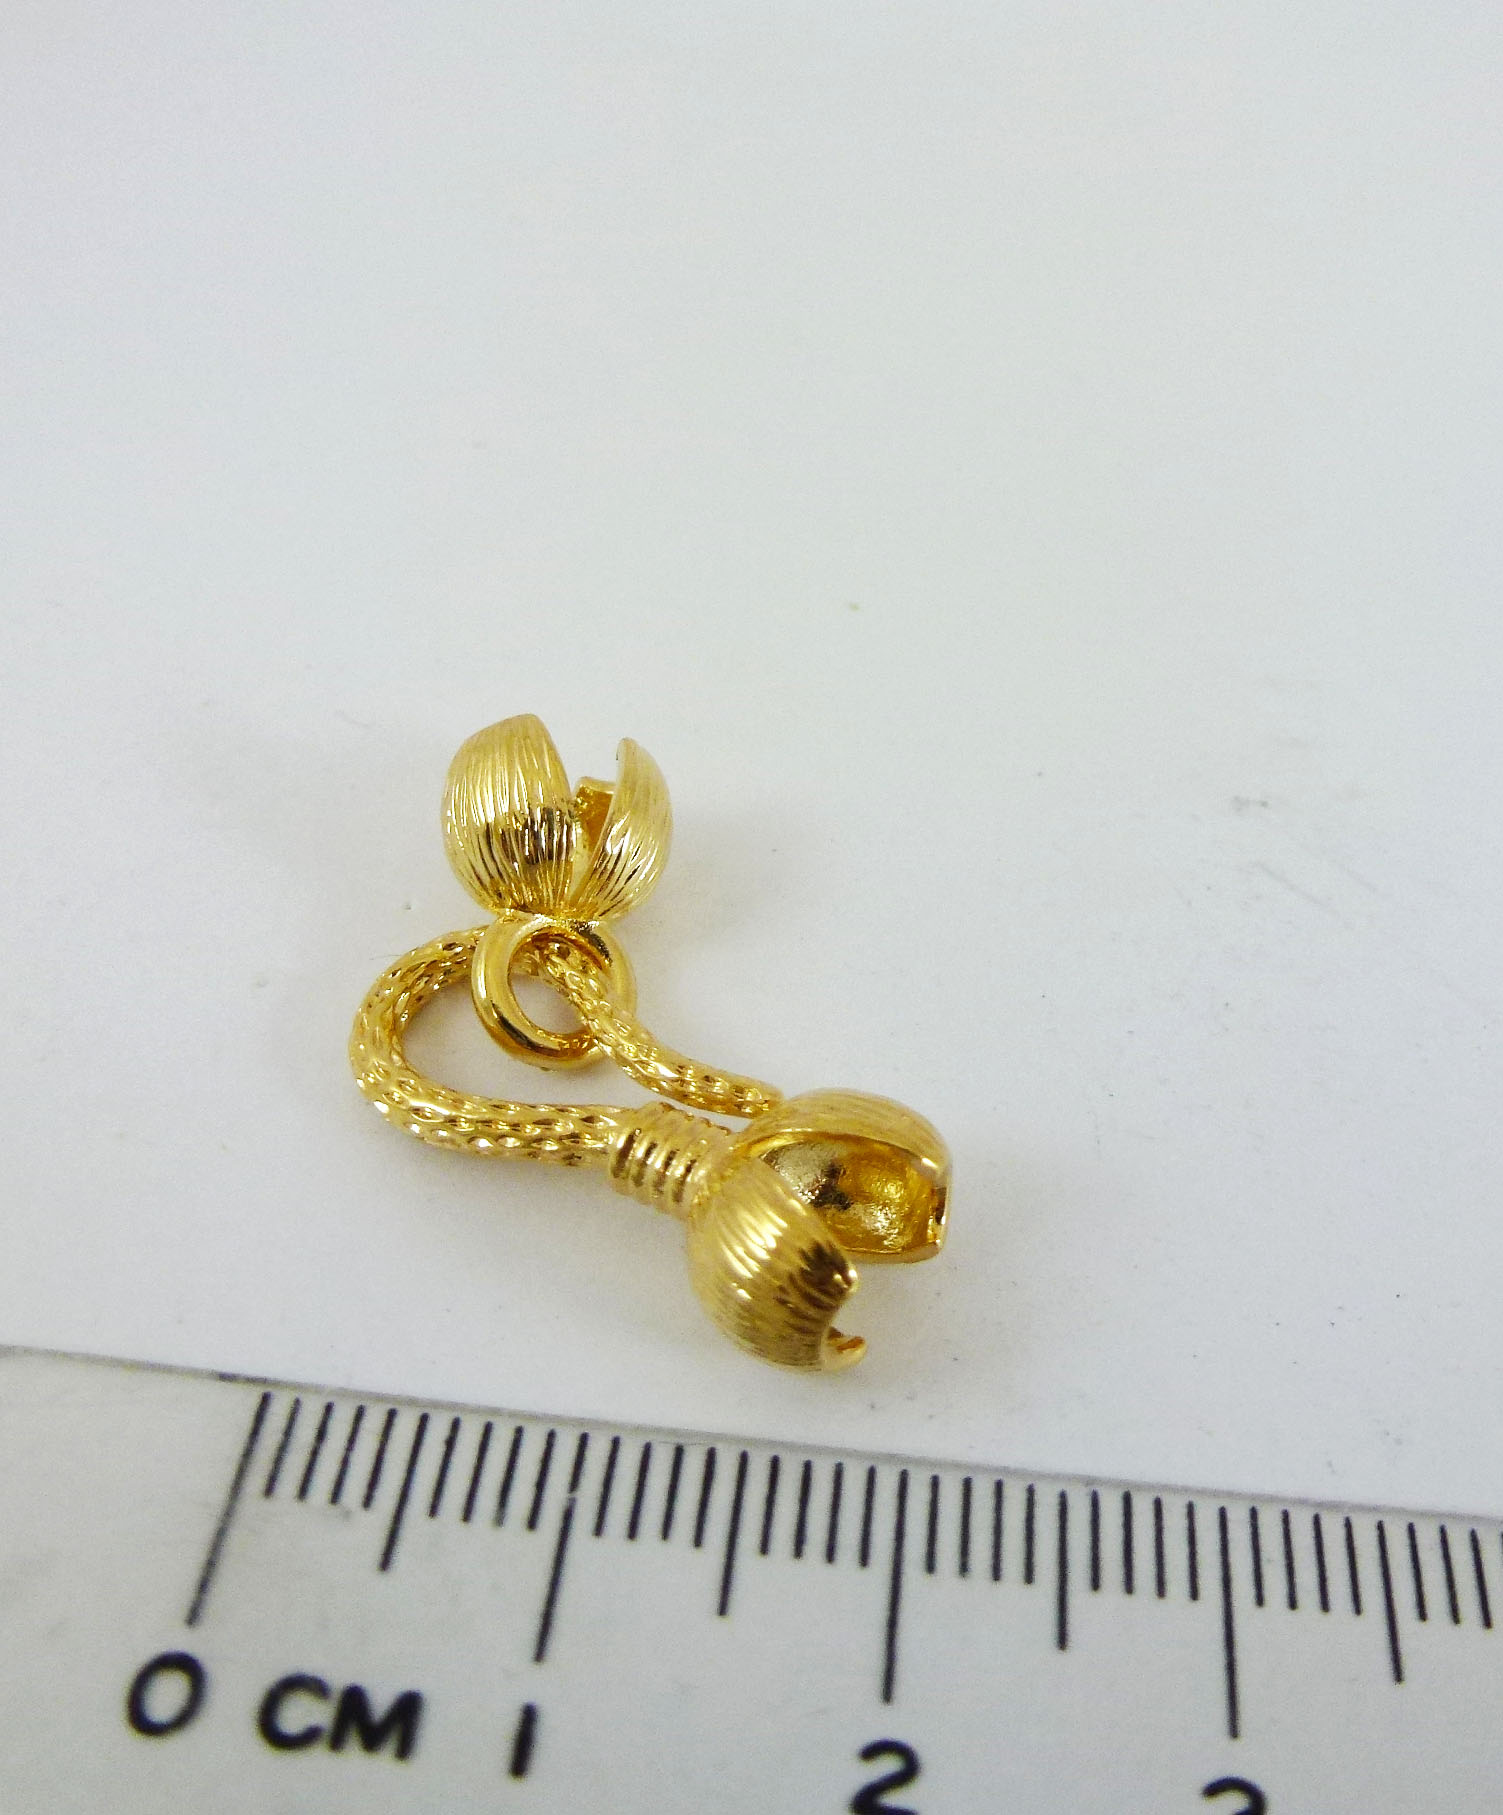 7mm銅鍍金色花形扣頭